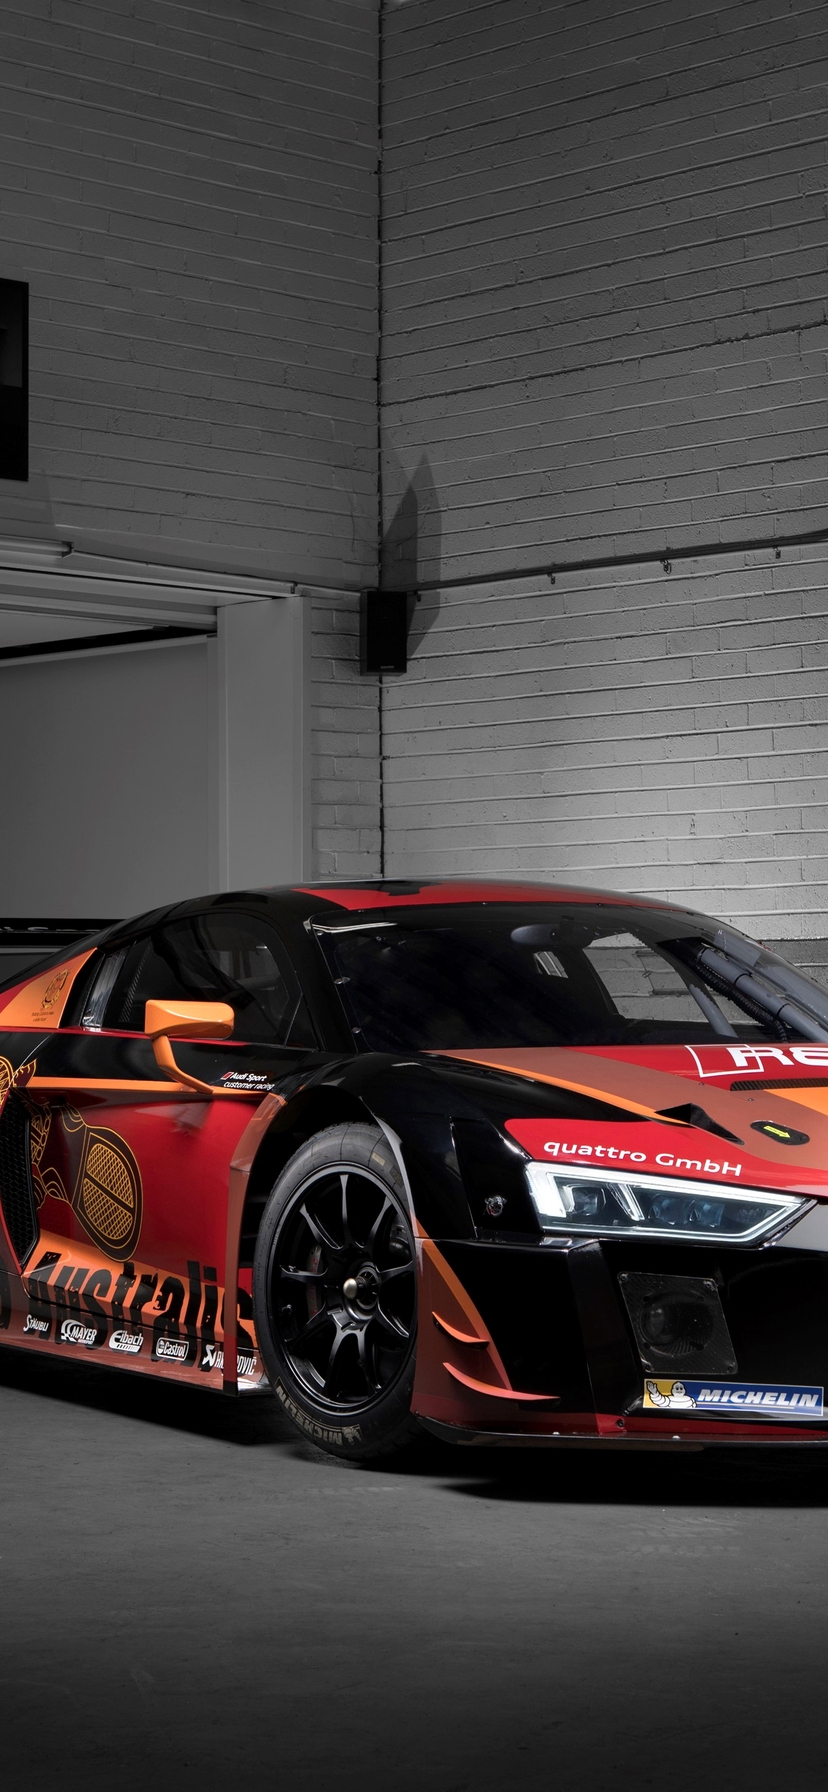 Картинка: Audi R8, гоночный автомобиль, Race Car, спорткар, тюнинг